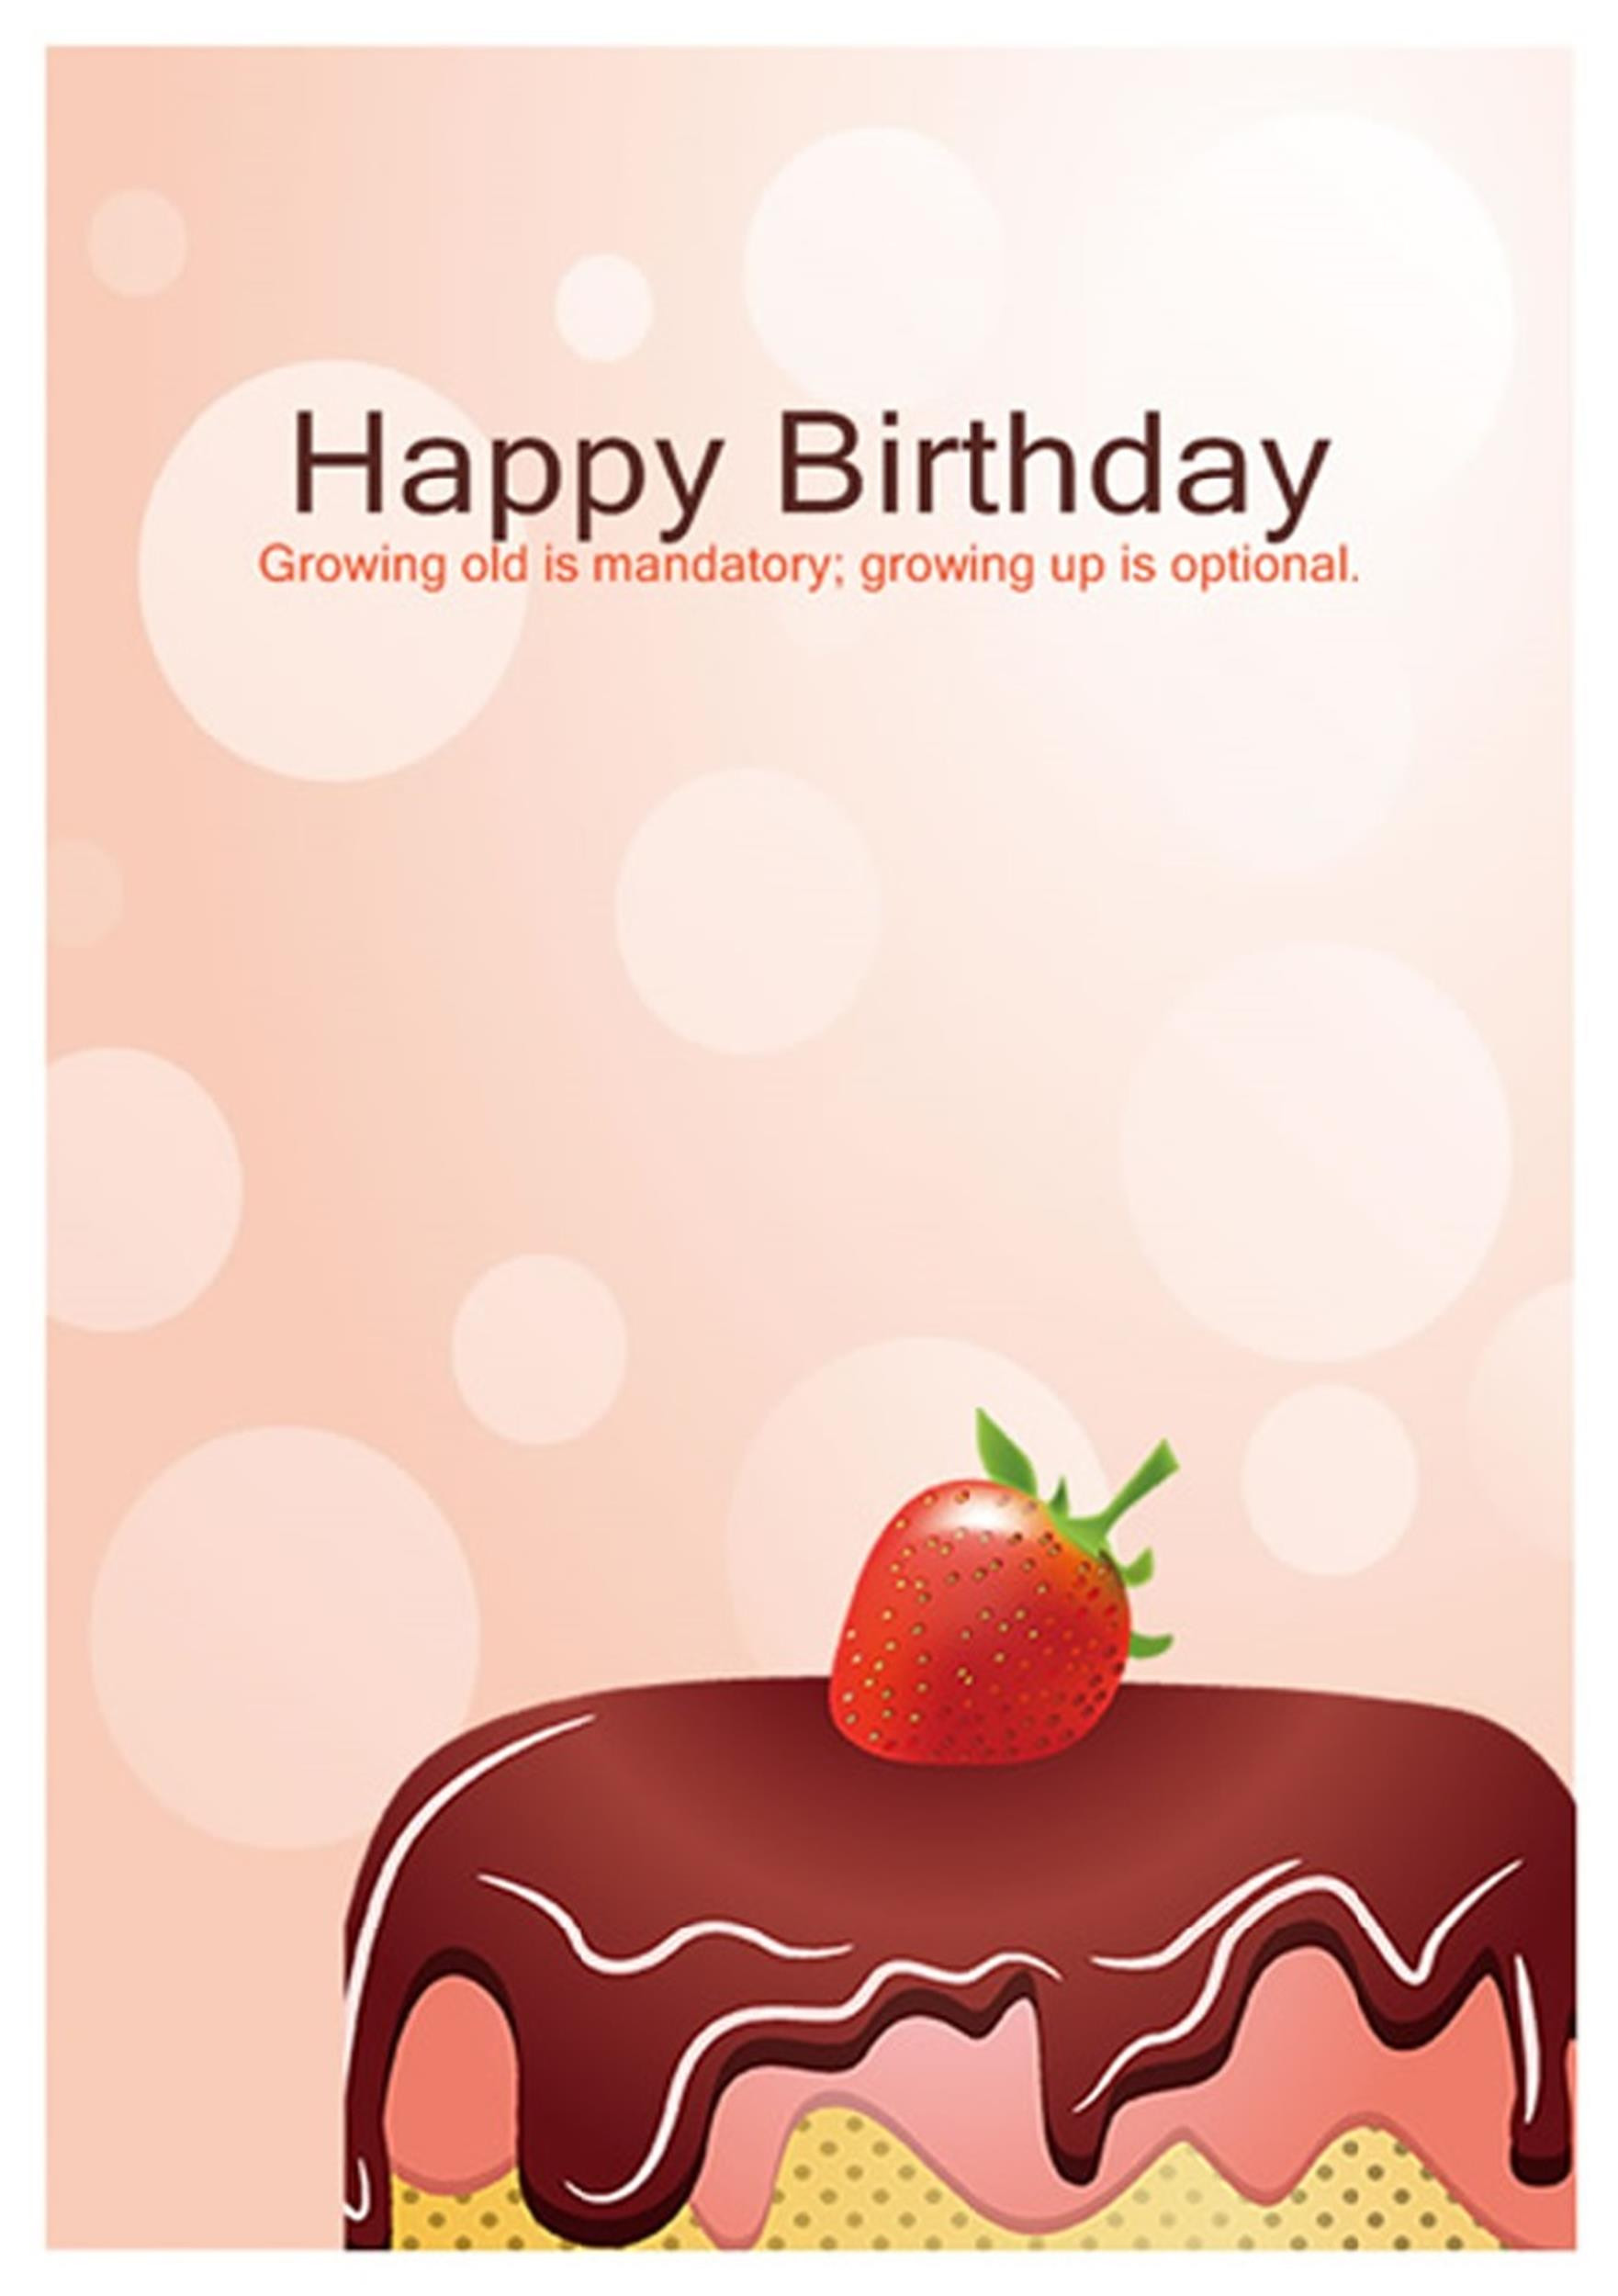 Free Birthday Card Template
 40 FREE Birthday Card Templates TemplateLab